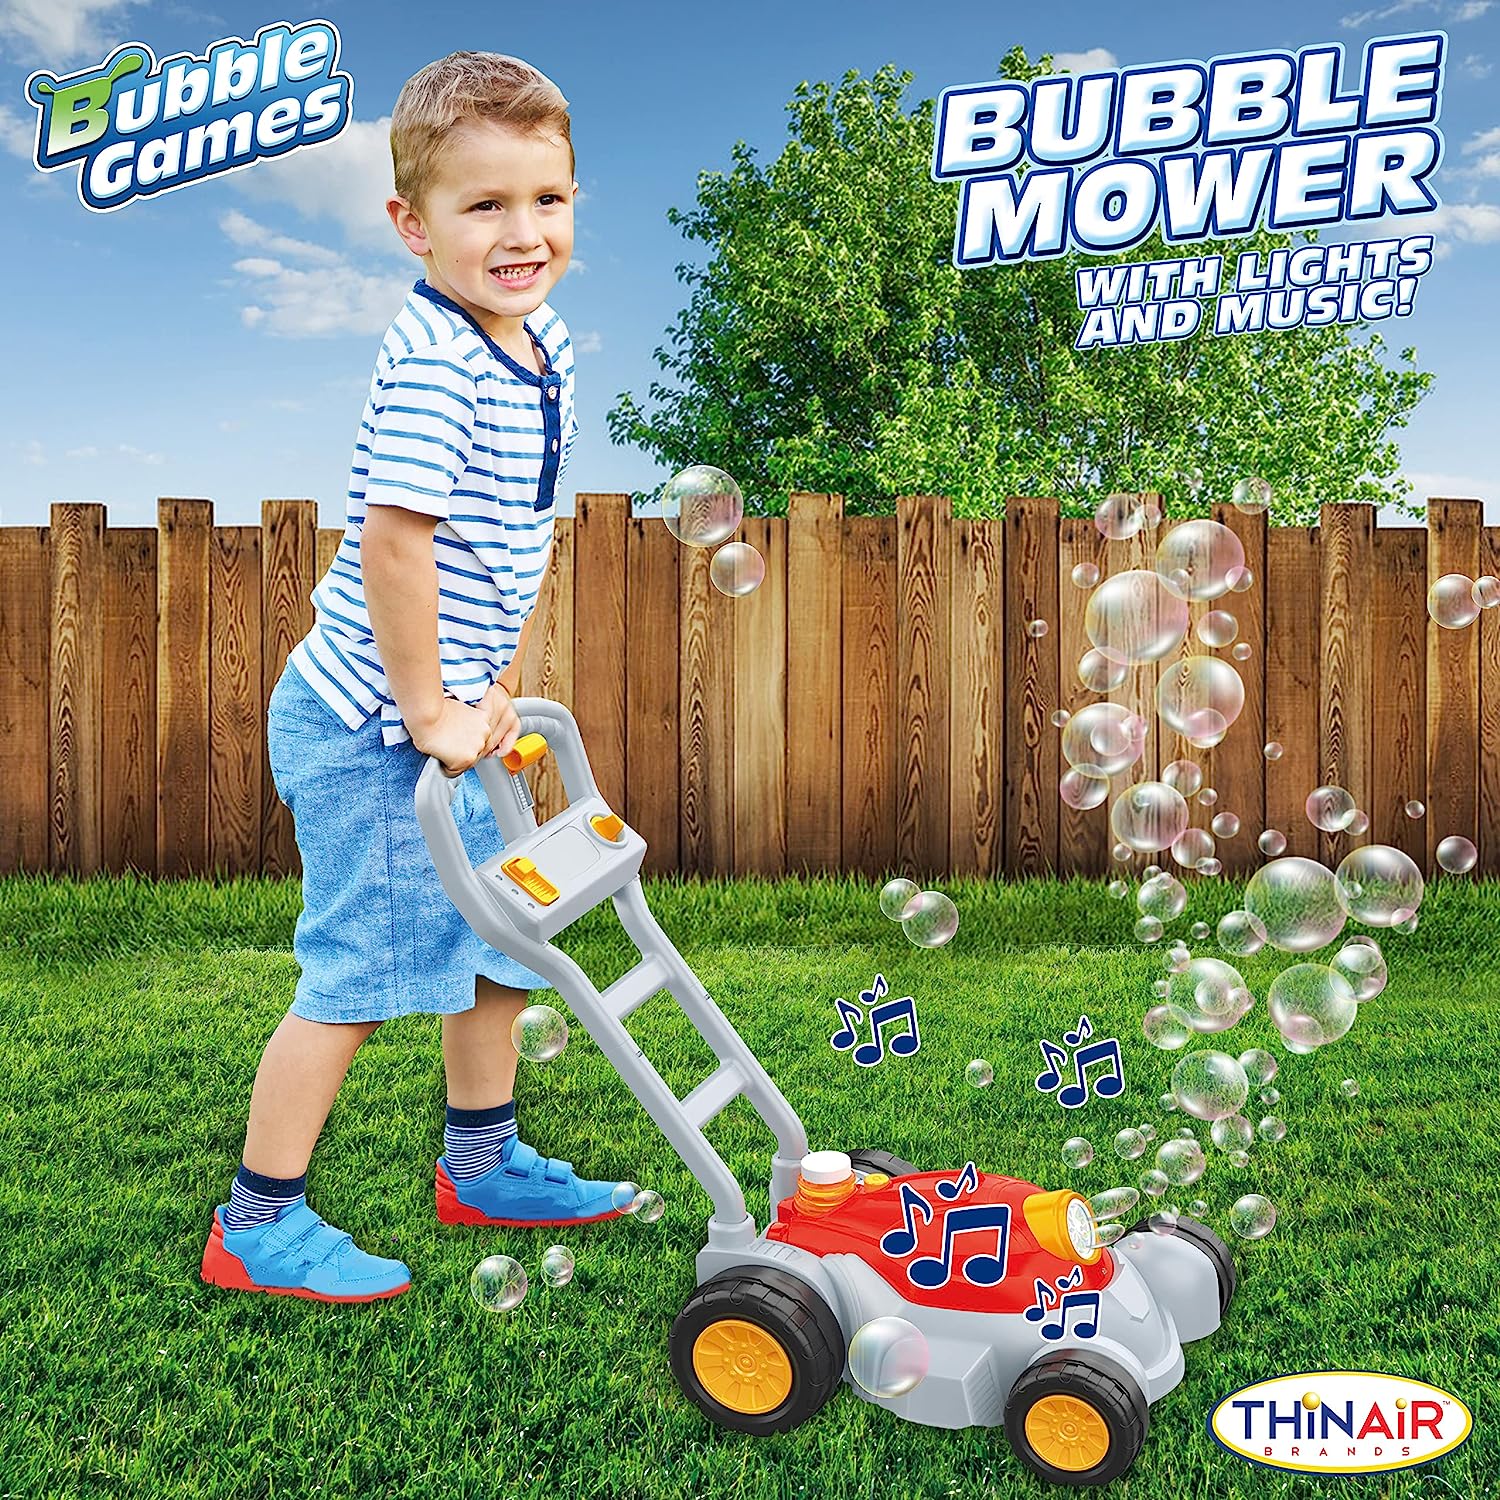 Fisher Price Bubble Mower Play Lawn Mower Children Outdoor Garden Toy